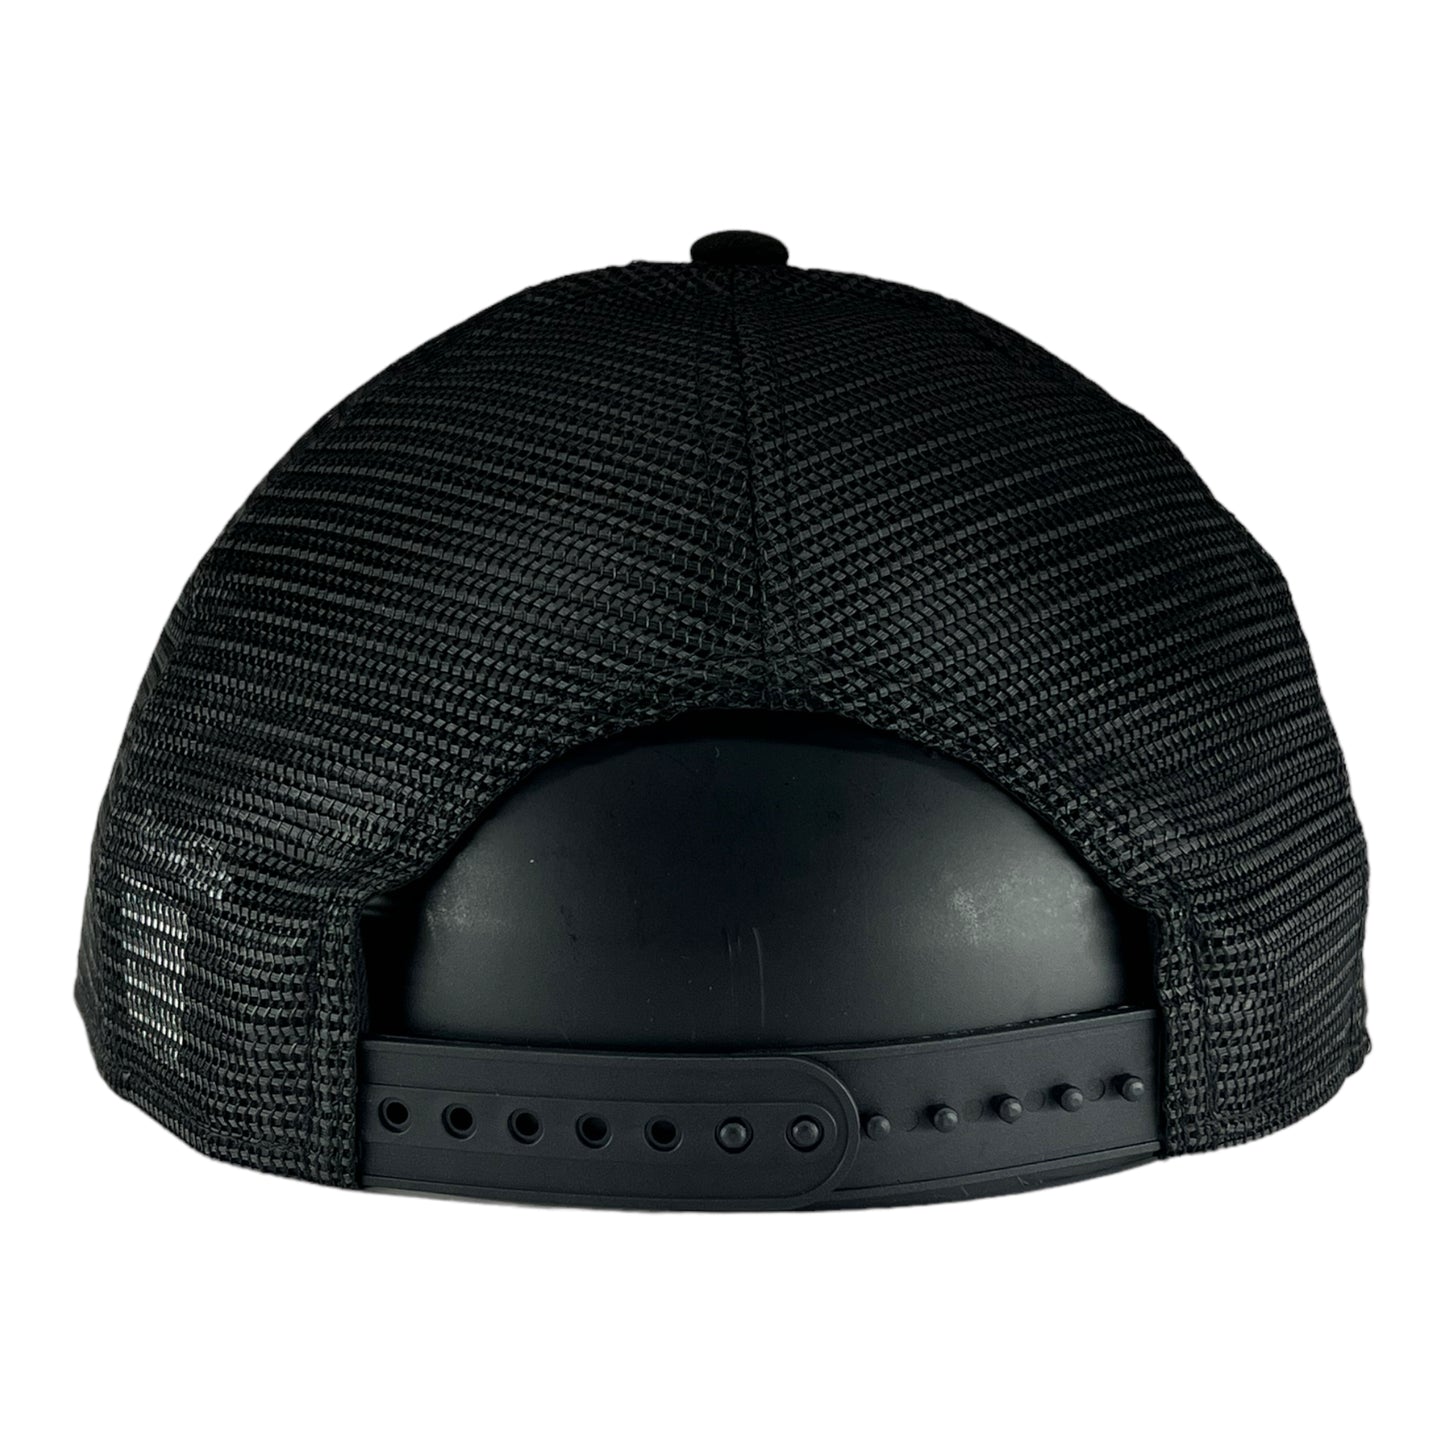 Chicago Bears Black/White Bear Head New Era Low Profile 9FIFTY Snapback Hat